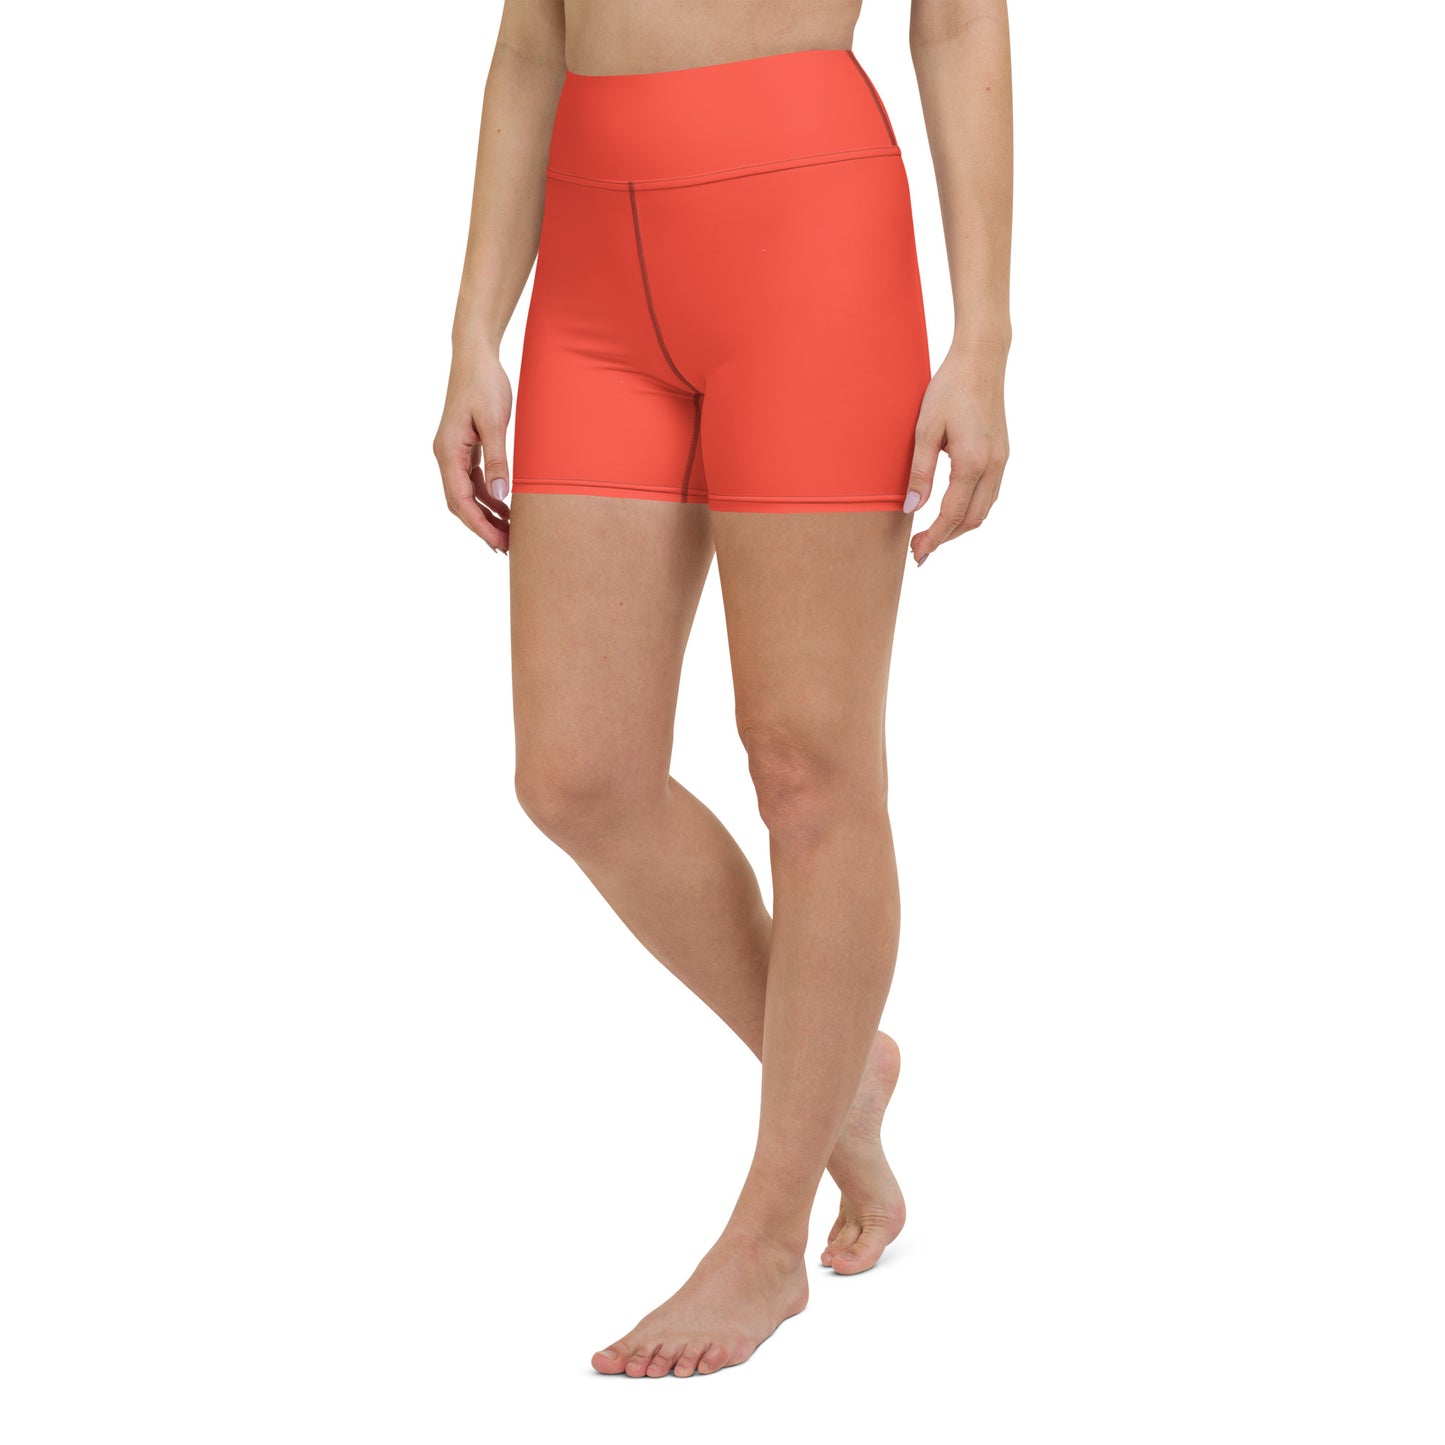 Surma Solid Red High Waist Yoga Shorts / Bike Shorts with Inside Pocket